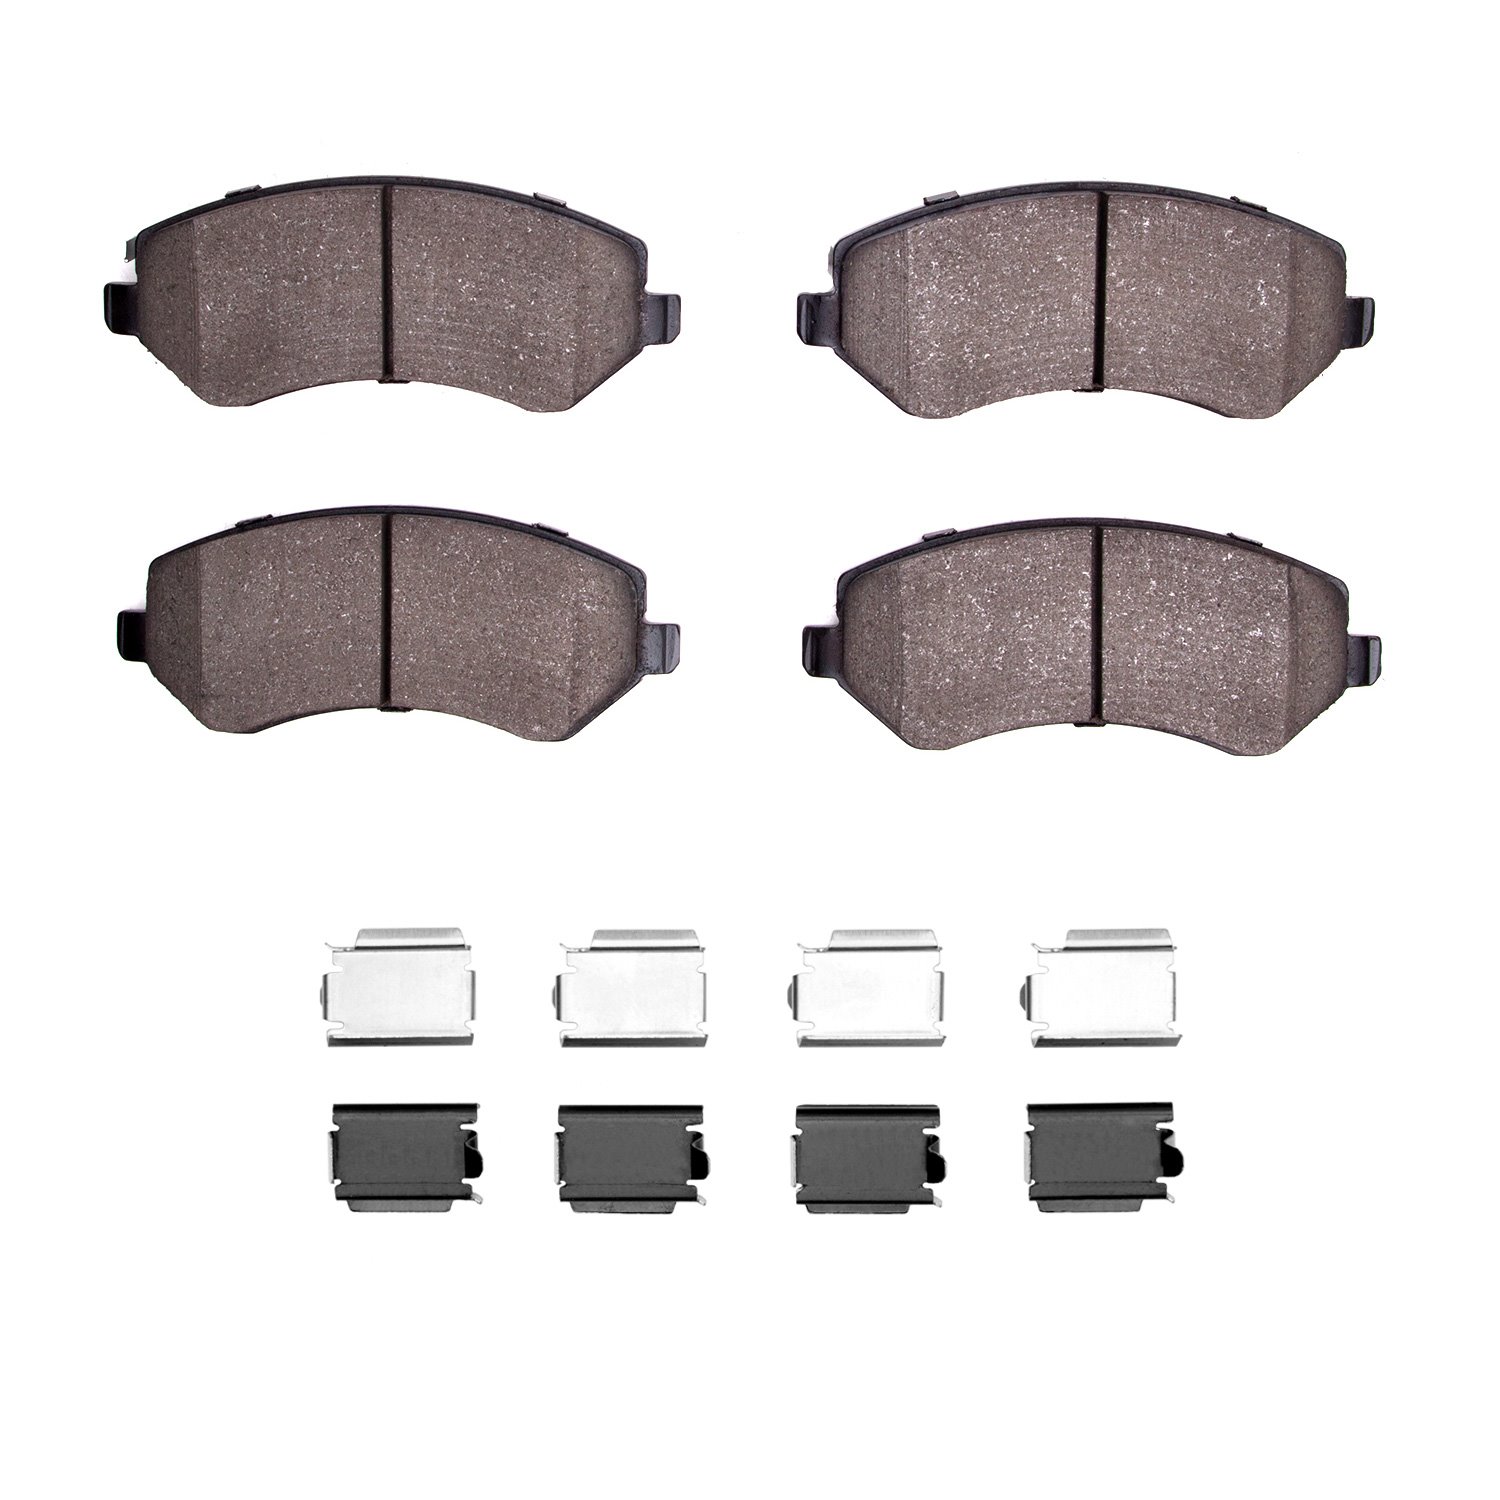 1310-0856-01 3000-Series Ceramic Brake Pads & Hardware Kit, 2001-2007 Mopar, Position: Front